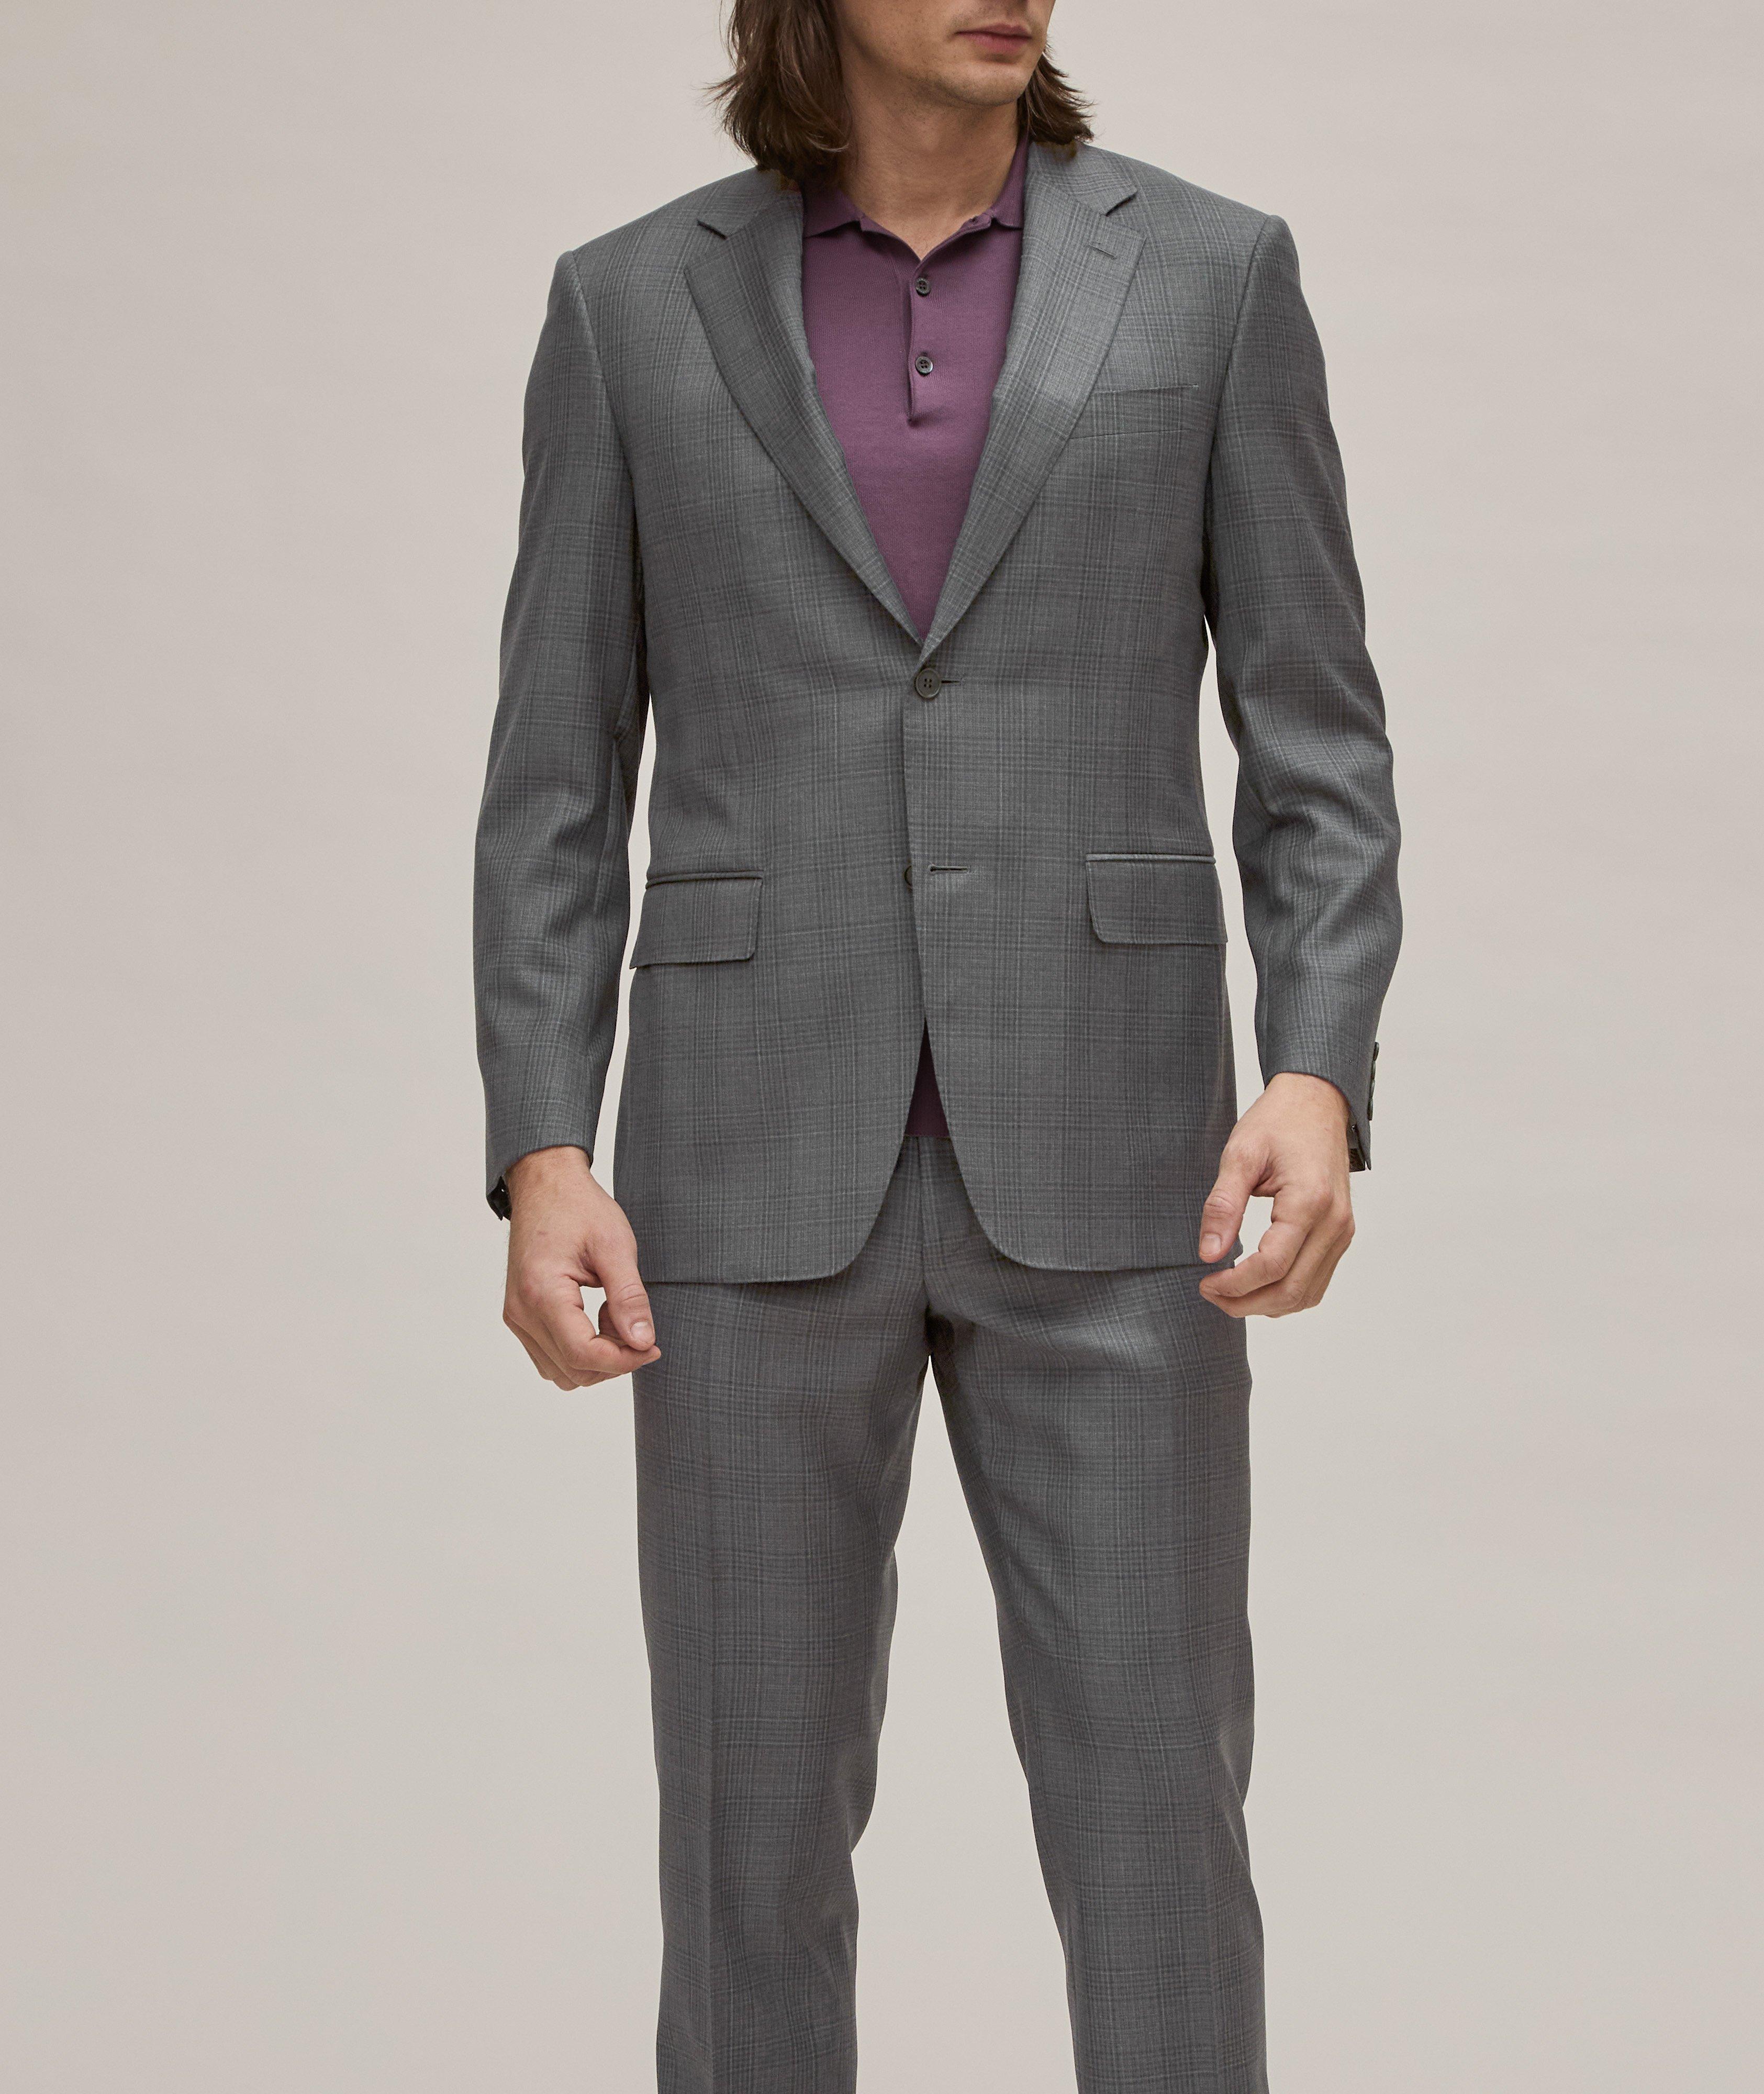 Tonal Glen Check Wool Suit image 1